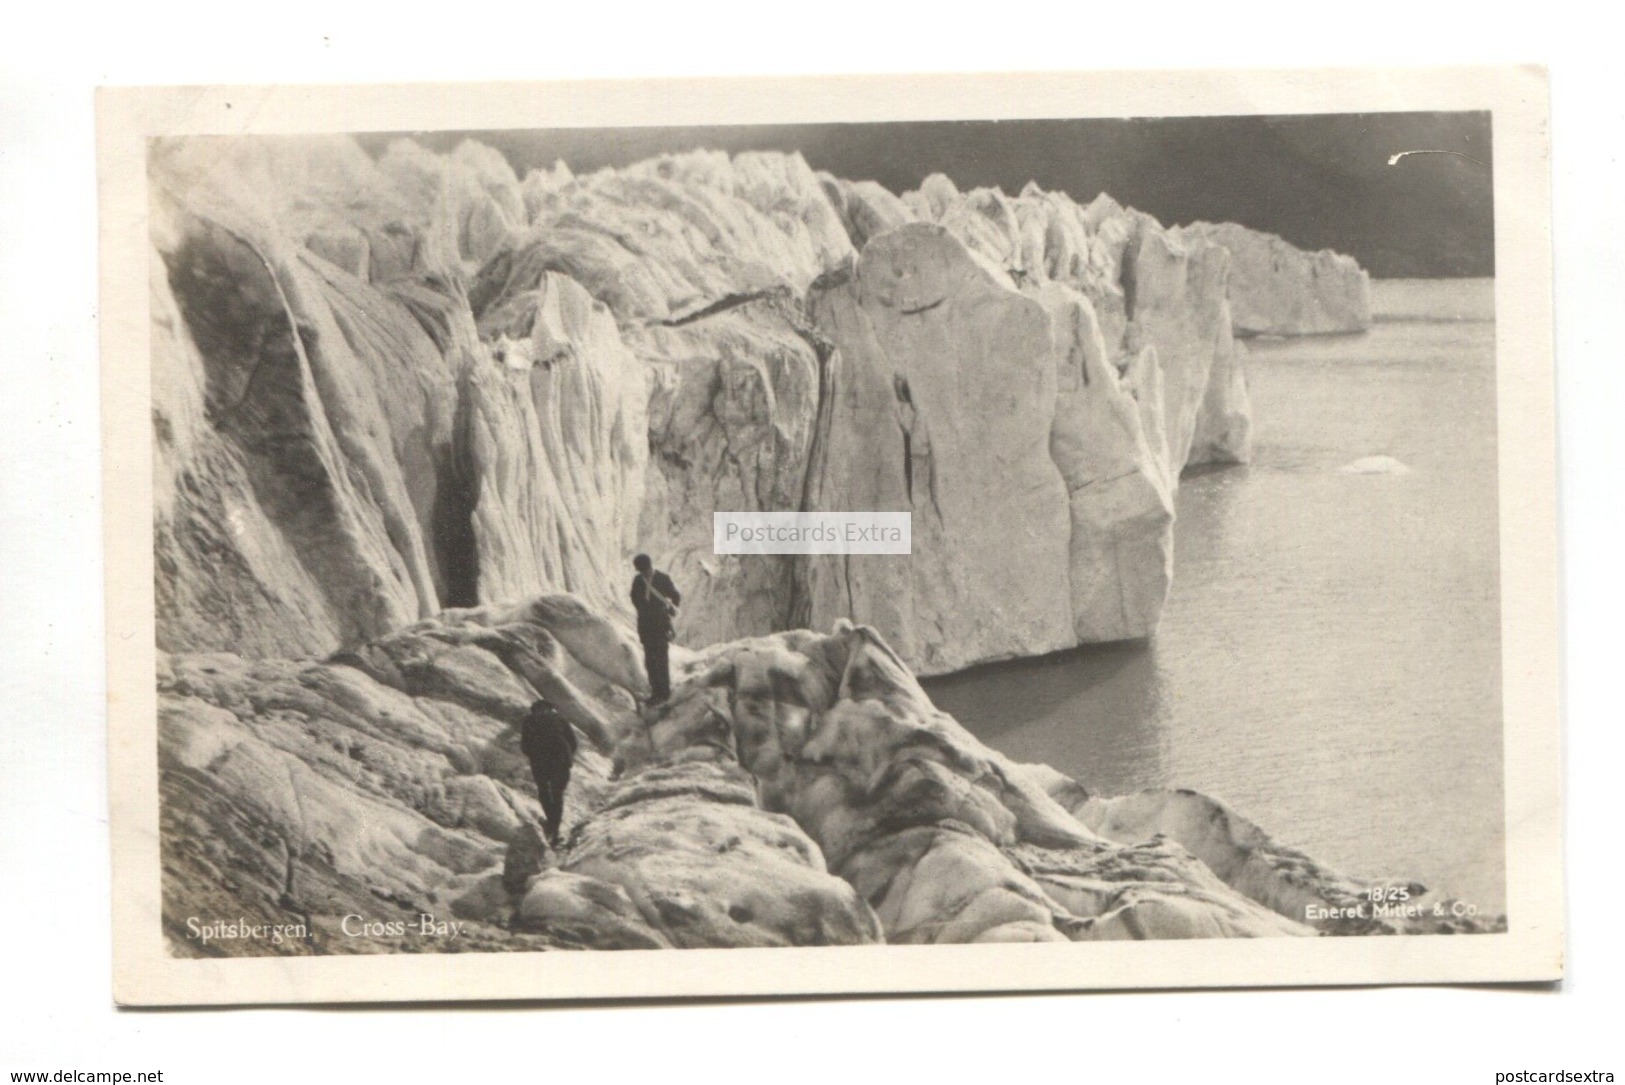 Spitzbergen - Cross Bay, Men Walking On Glacier - Old Norway Real Photo Postcard - Norway